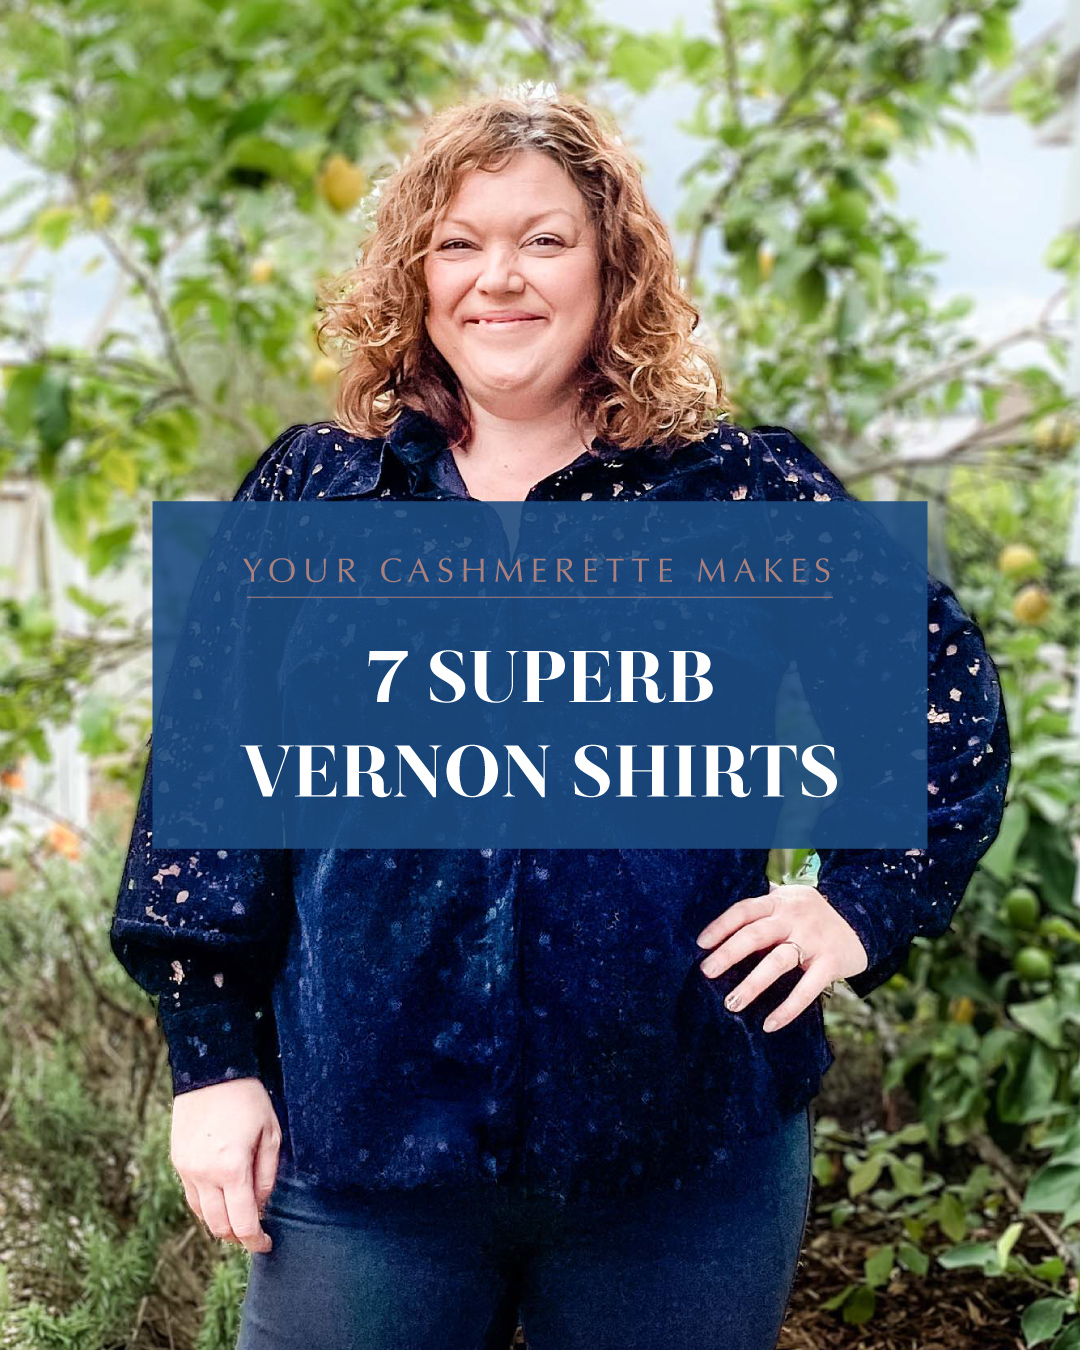 7 Superb Vernon Shirts